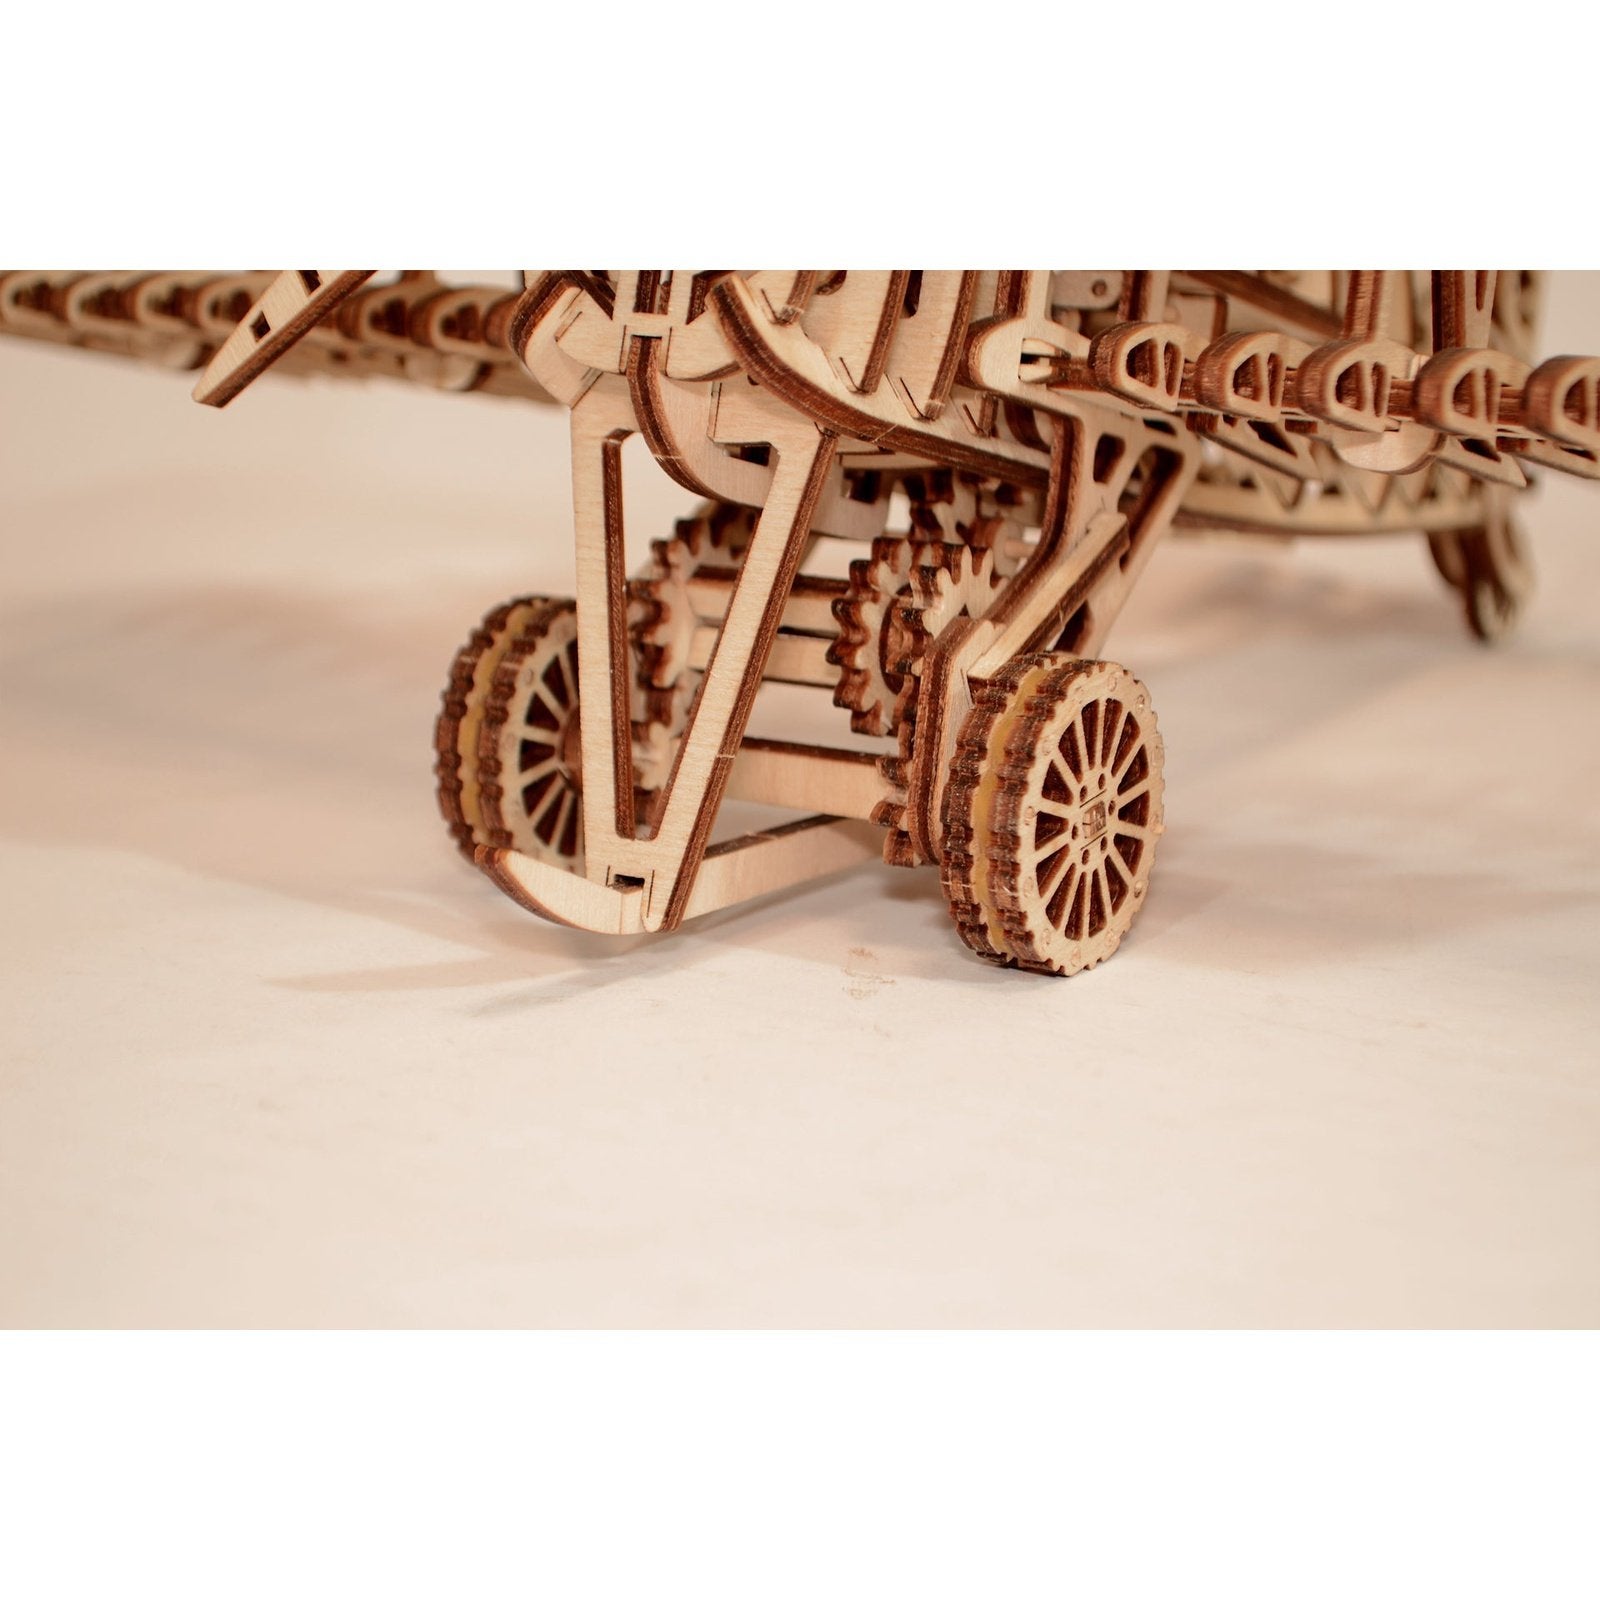 Wood Trick Vliegtuig - Houten Modelbouw